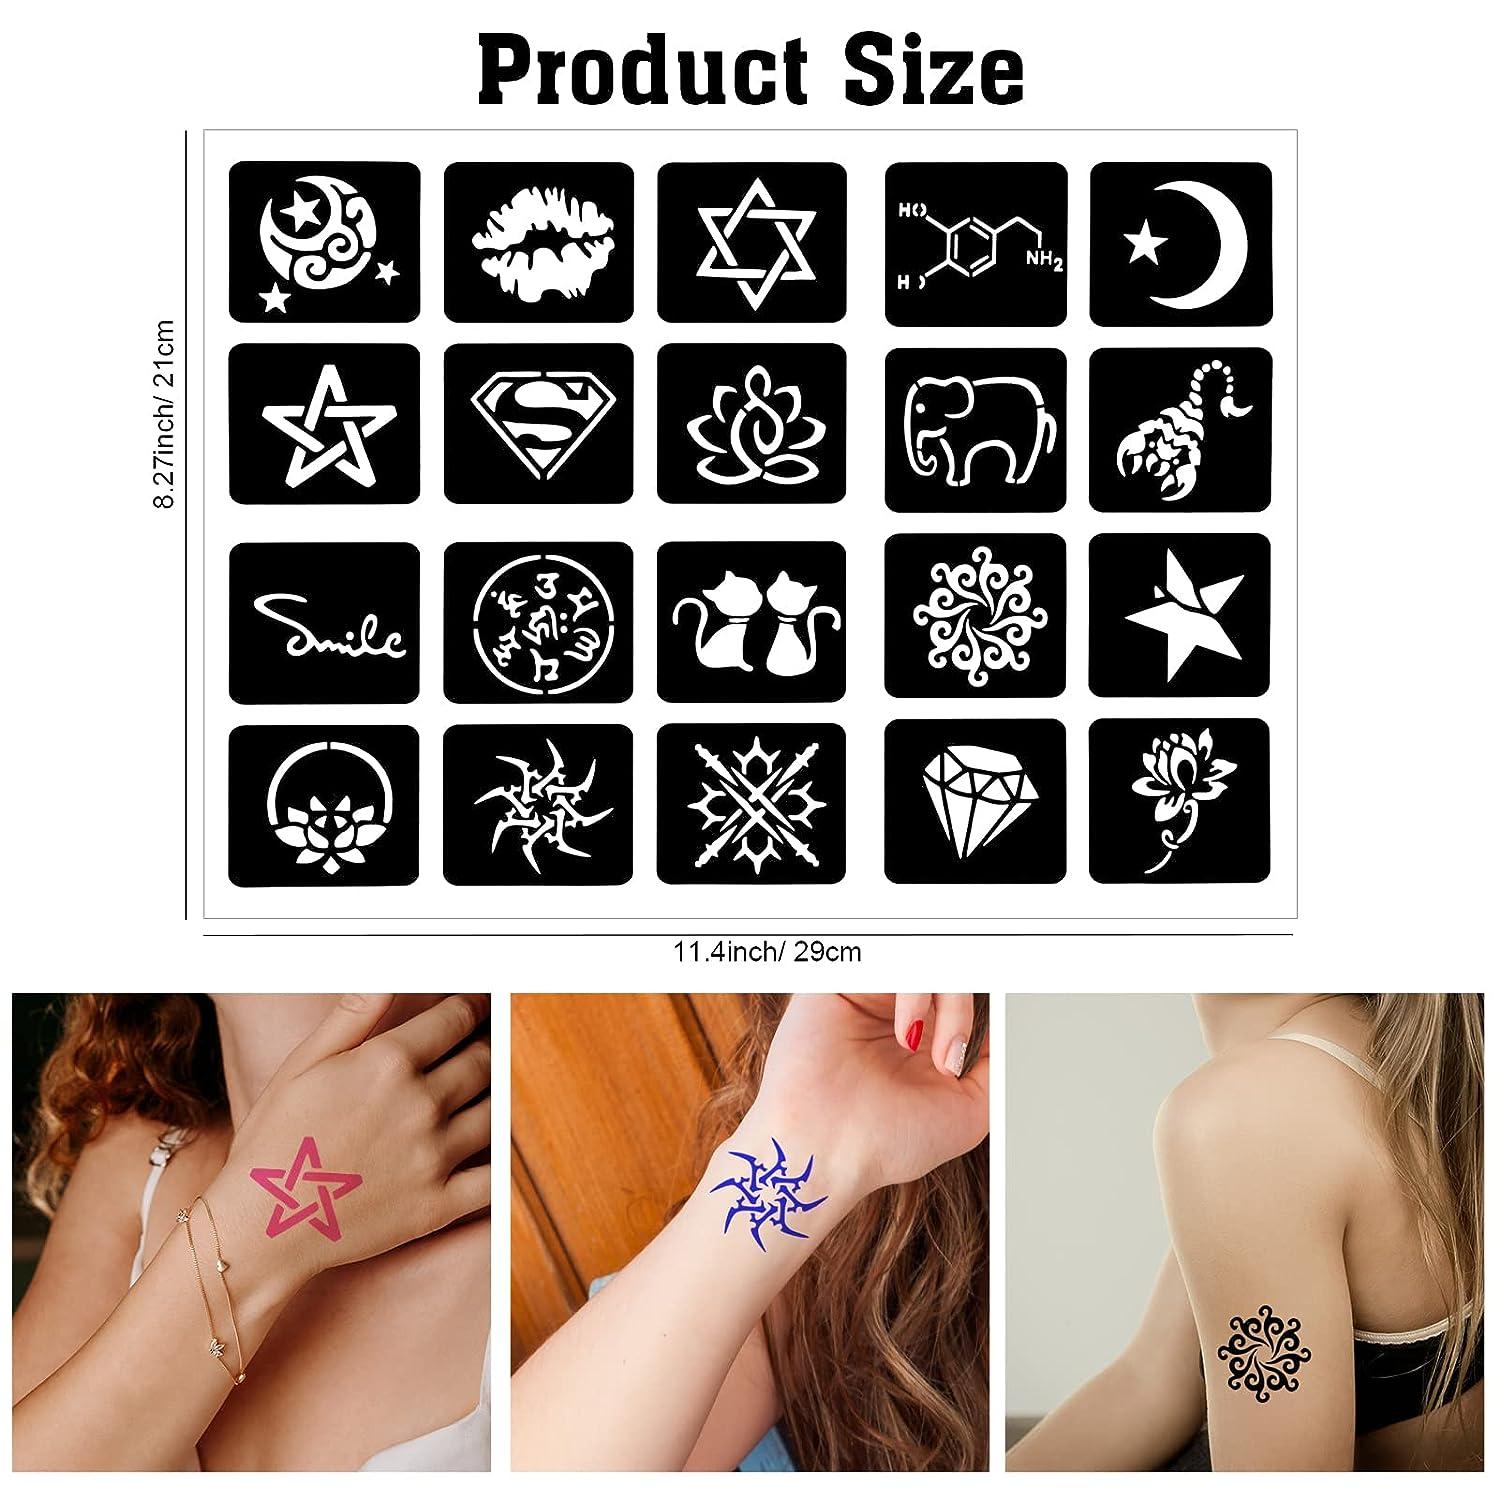 Minimalist Smiley Symbol Temporary Tattoo (Set of 3) – Small Tattoos